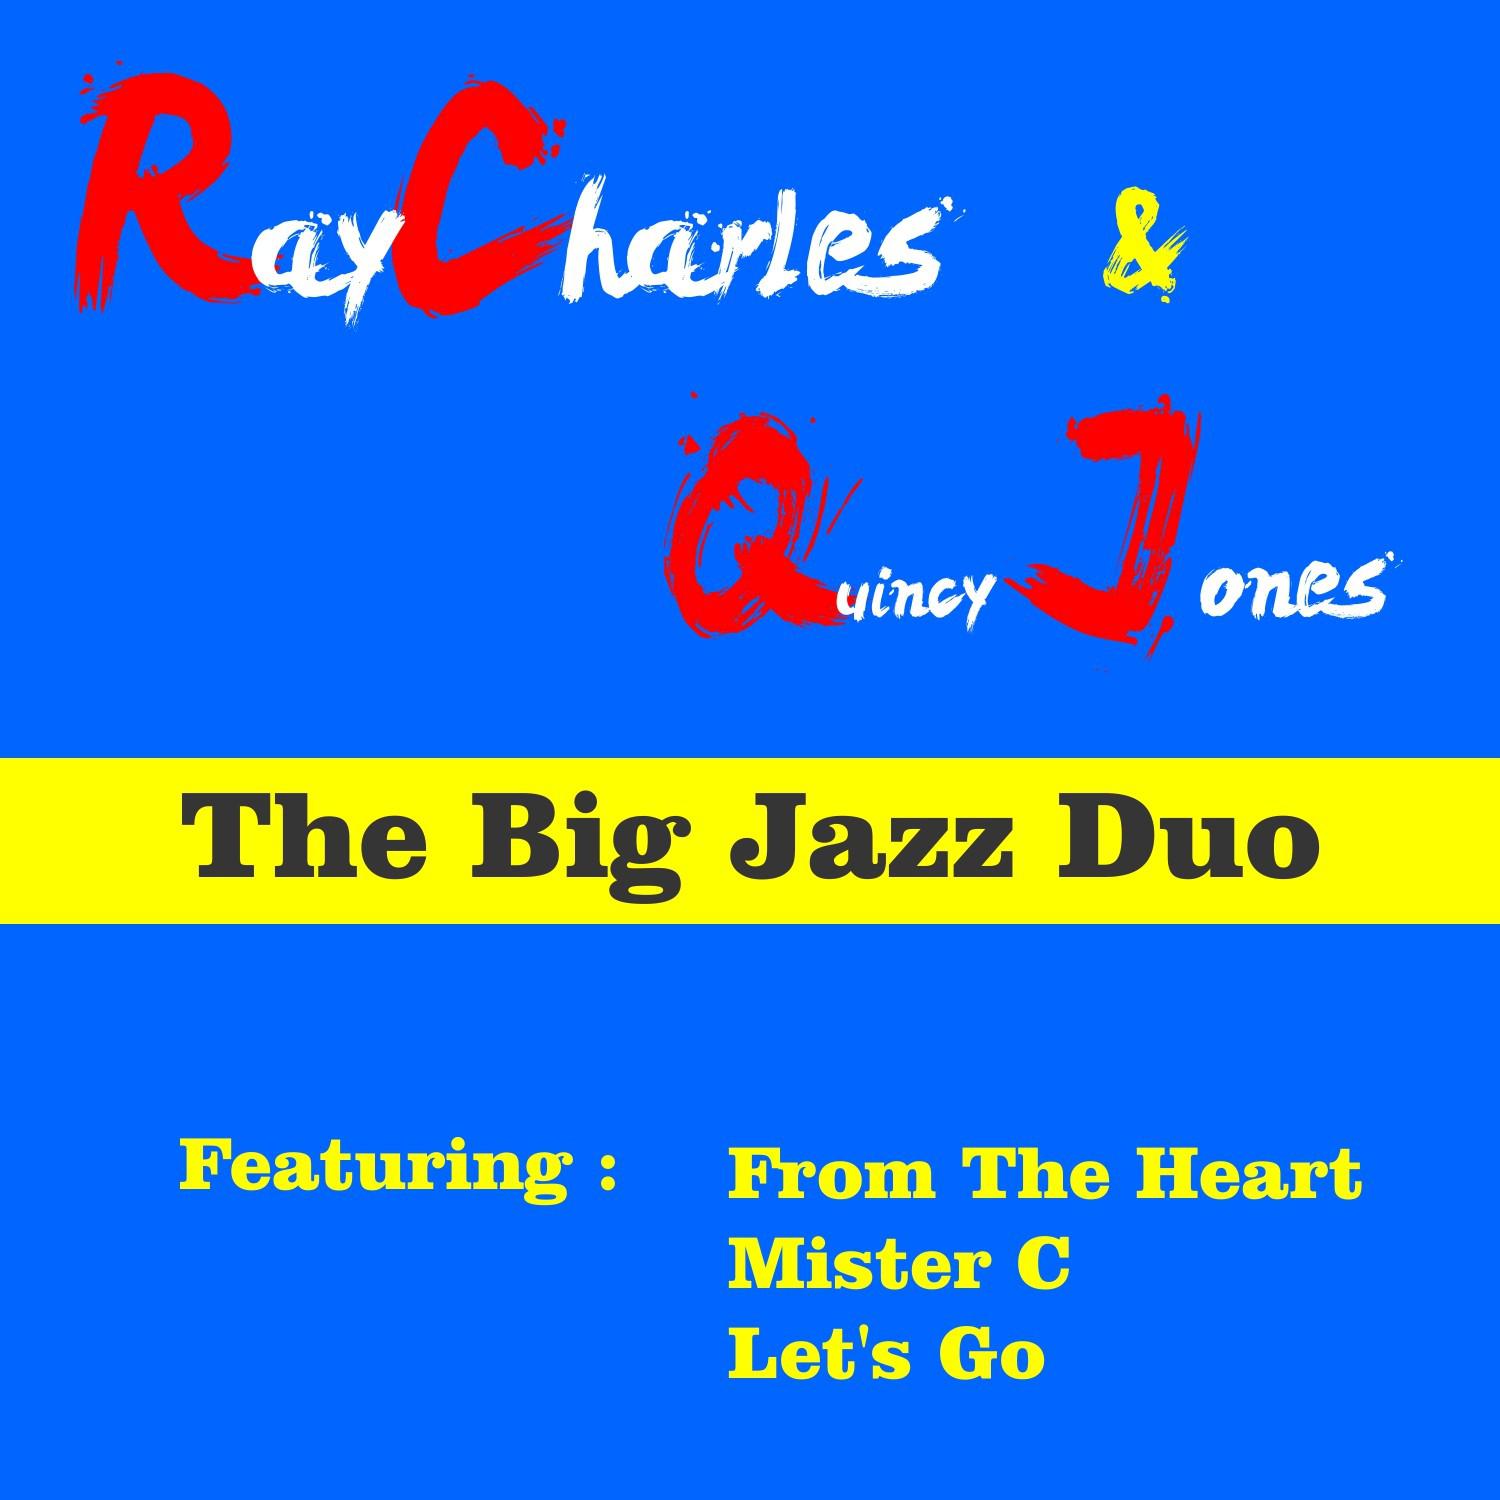 The Big Jazz Duo